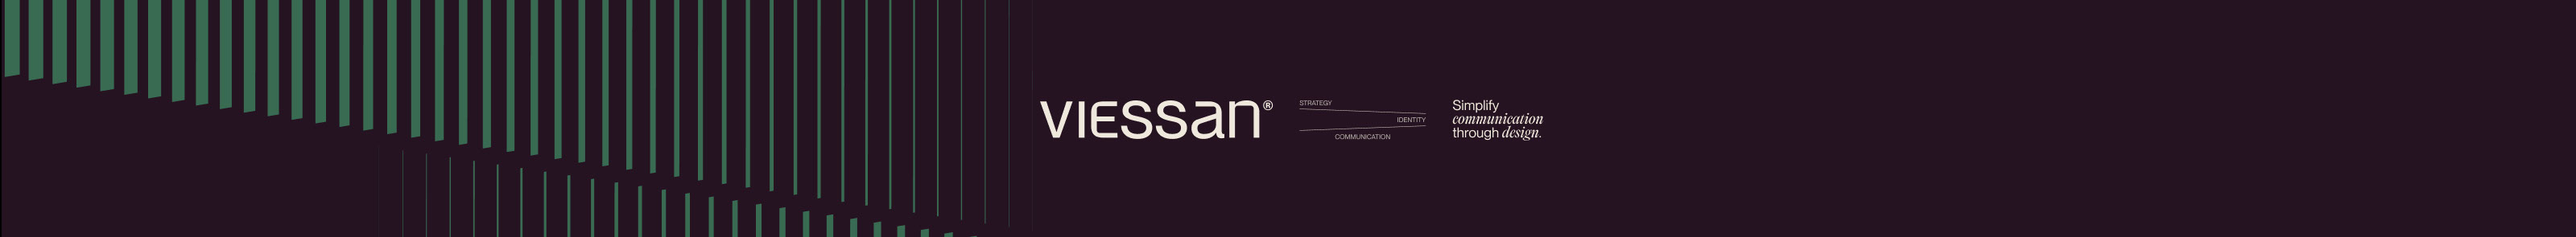 Viessan Studio's profile banner